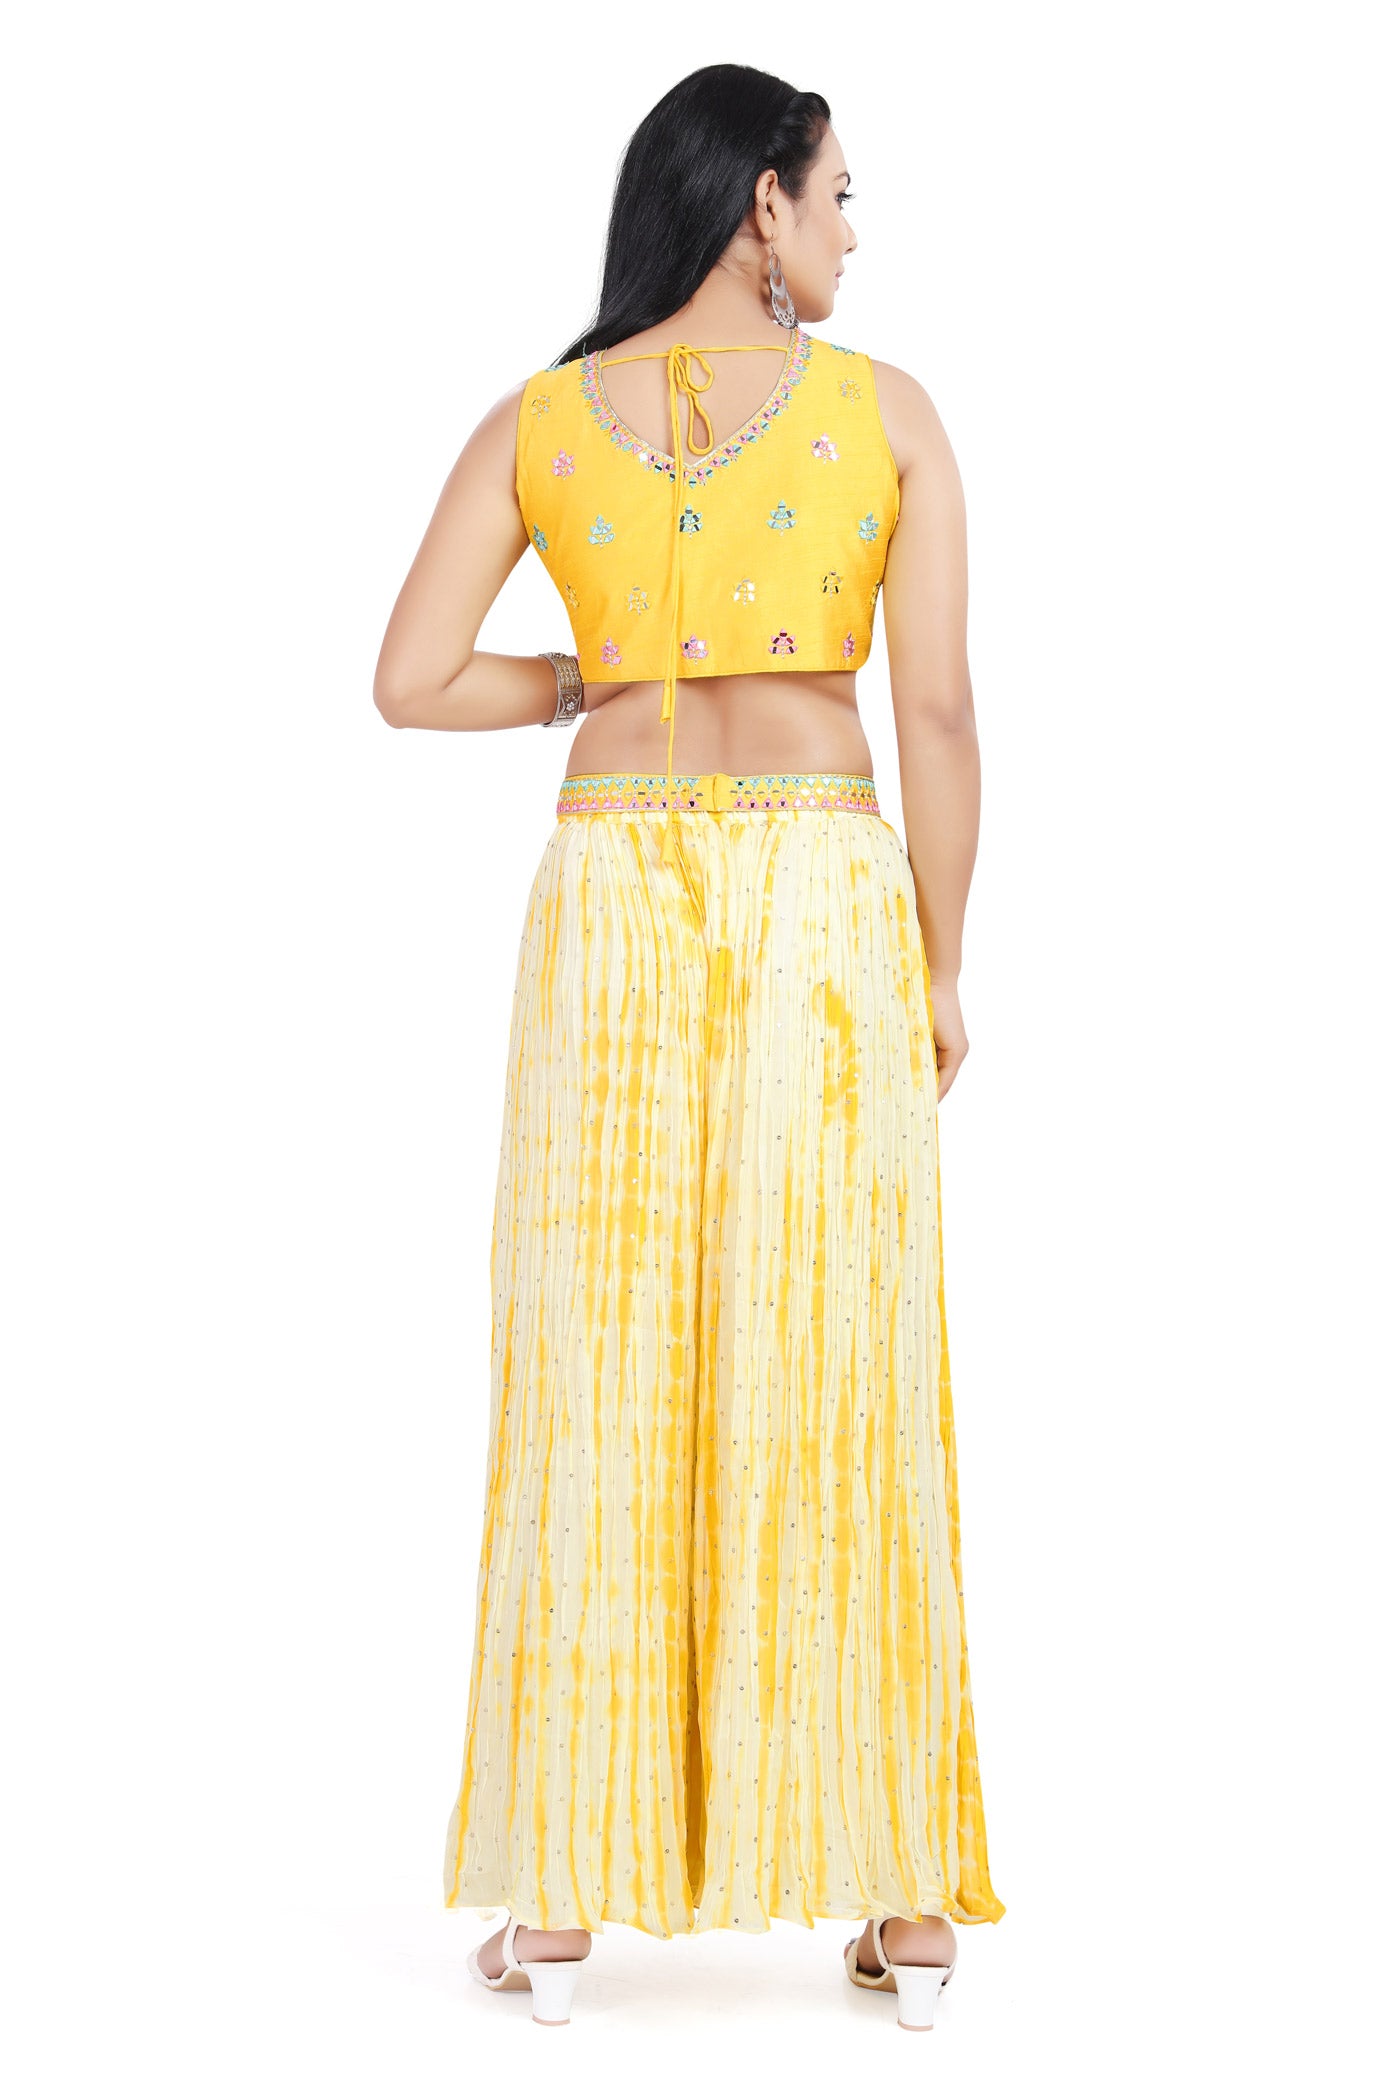 Sunshine Yellow Shibori Tie-Dye with Mirrorwork Sharara Set-AariAmi Boutique